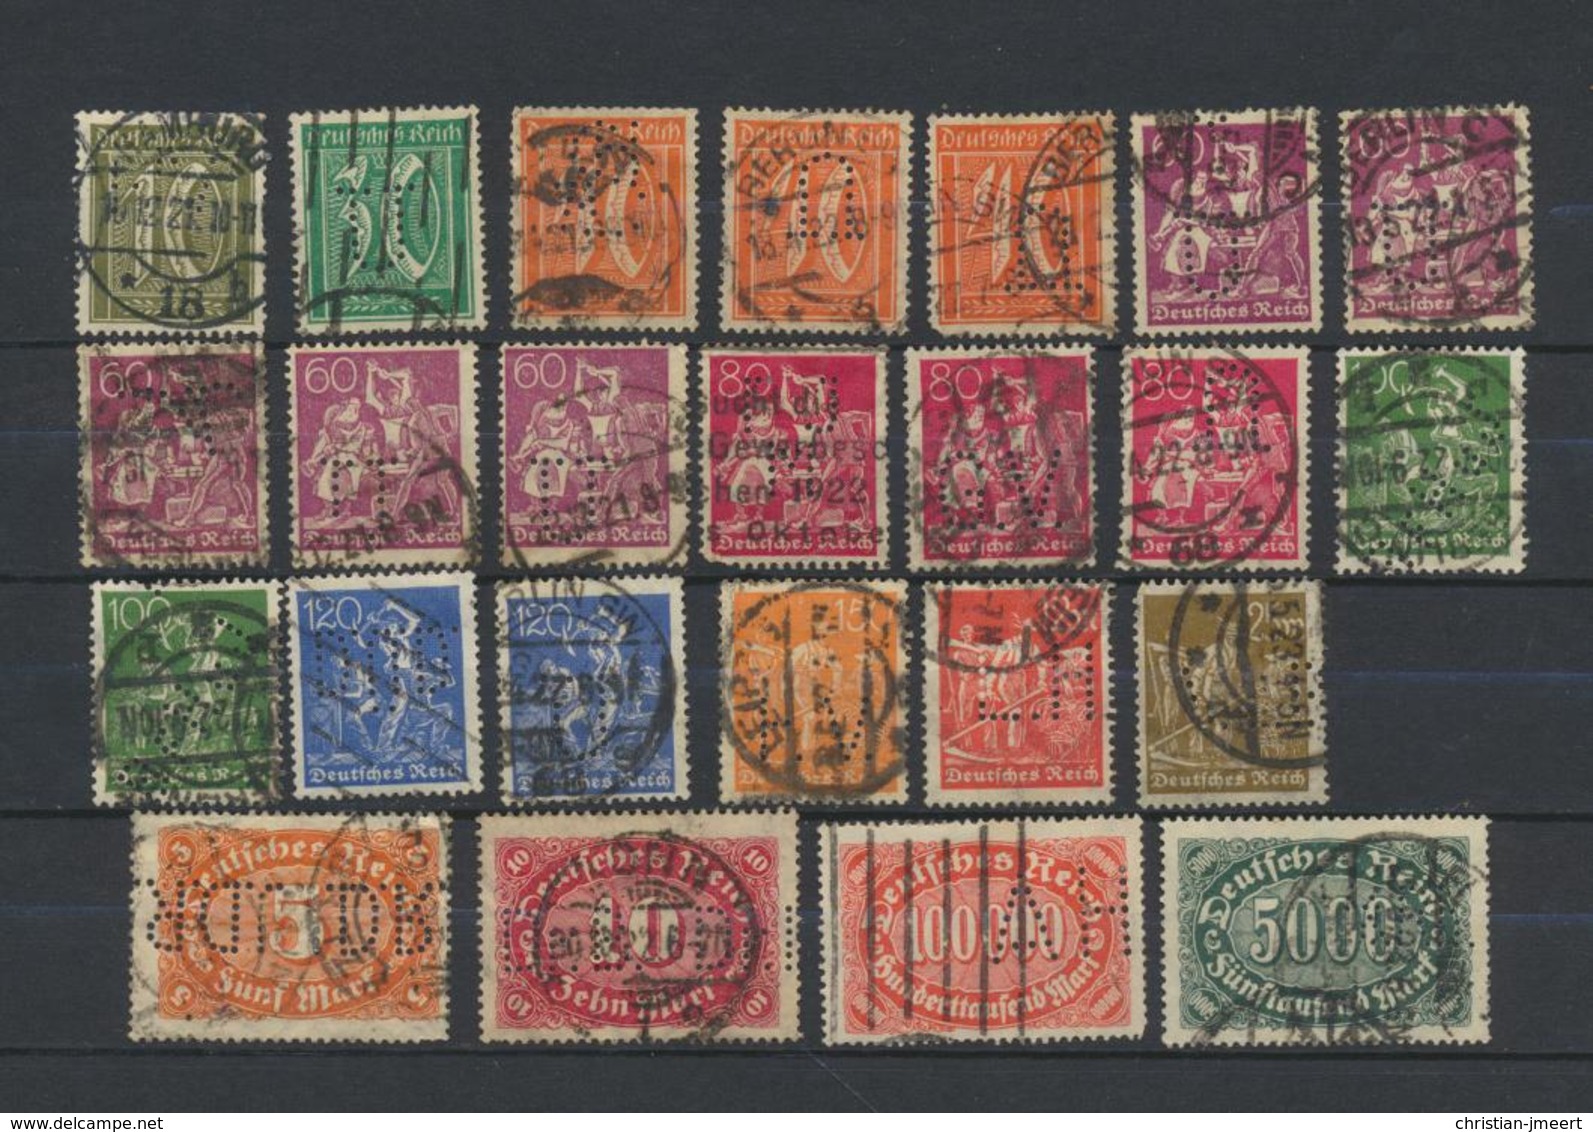 Perforés   Perfins   Reich  - firmenlochung  -lot important de 173 timbres - voir explications